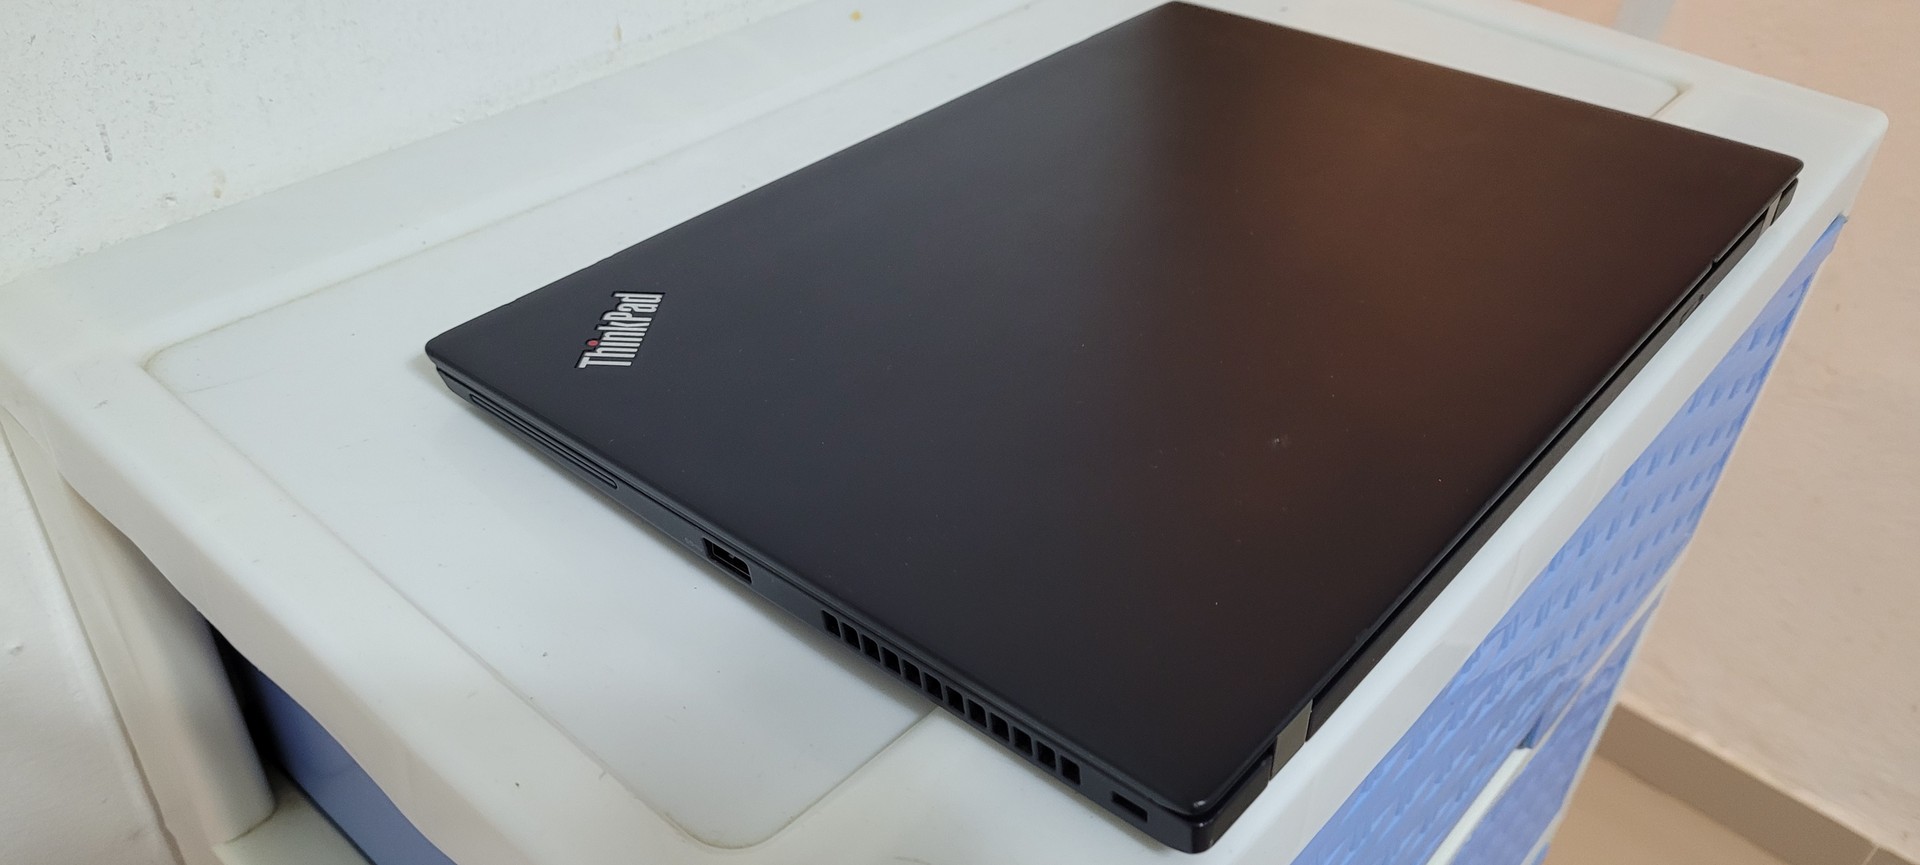 computadoras y laptops - Lenovo t460 14 Pulg Core i5 6ta Gen Ram 8gb Disco 256gb SSD New 2